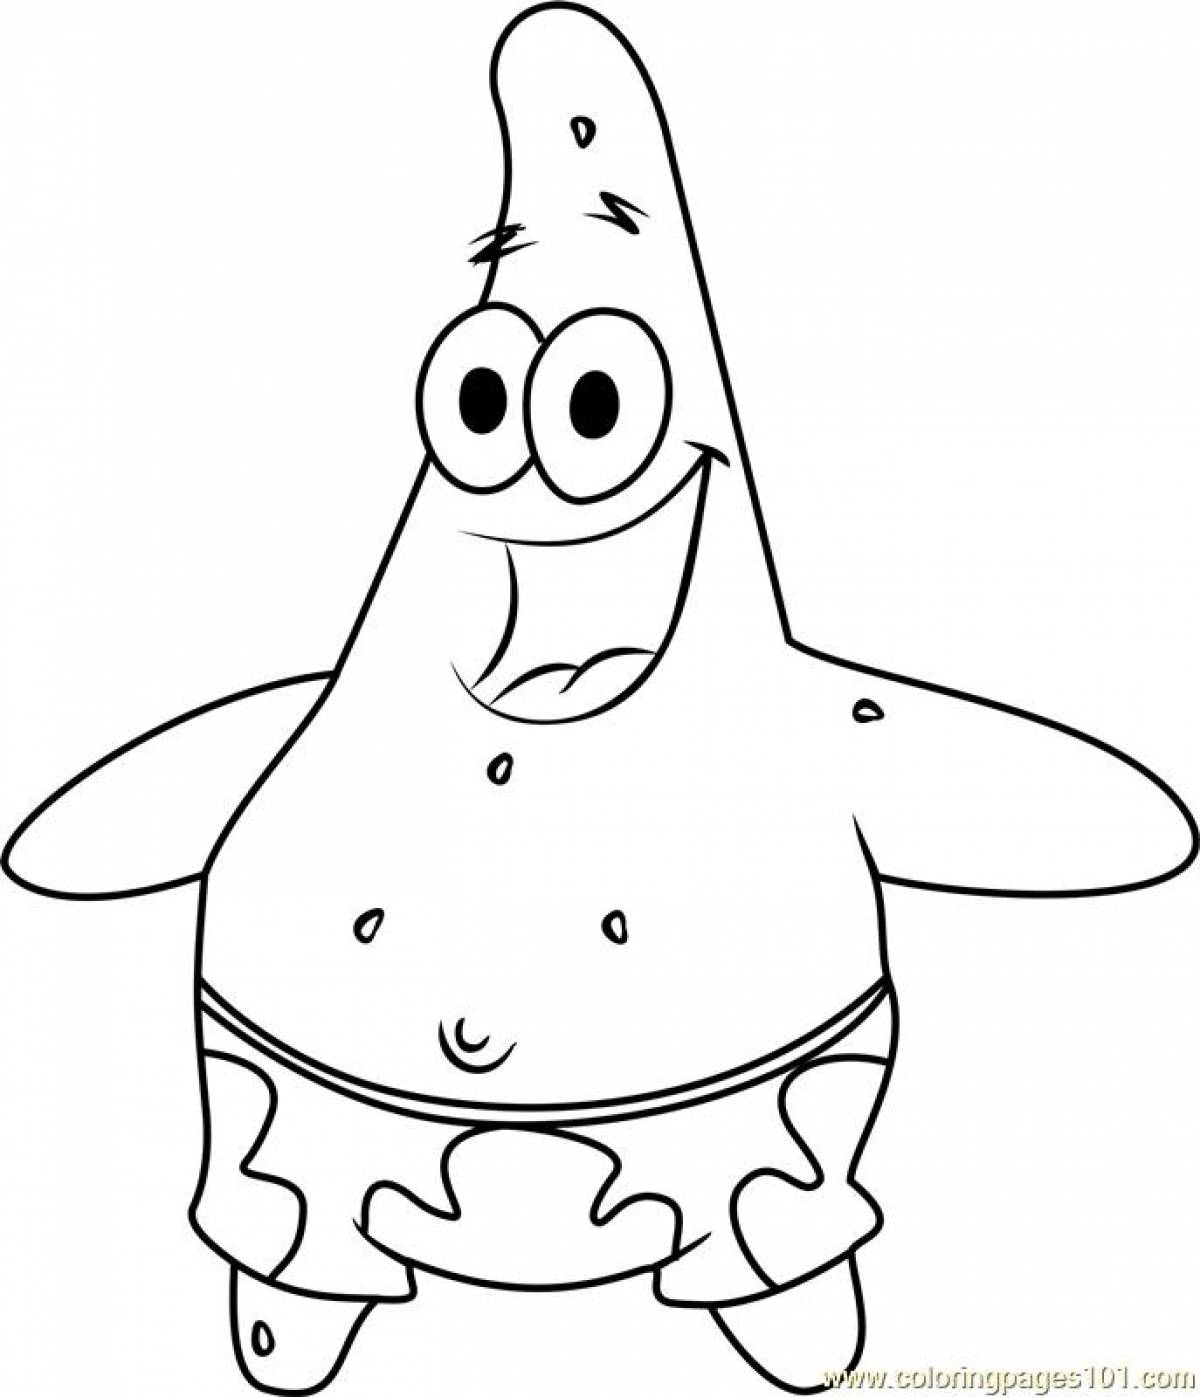 Patrick #3